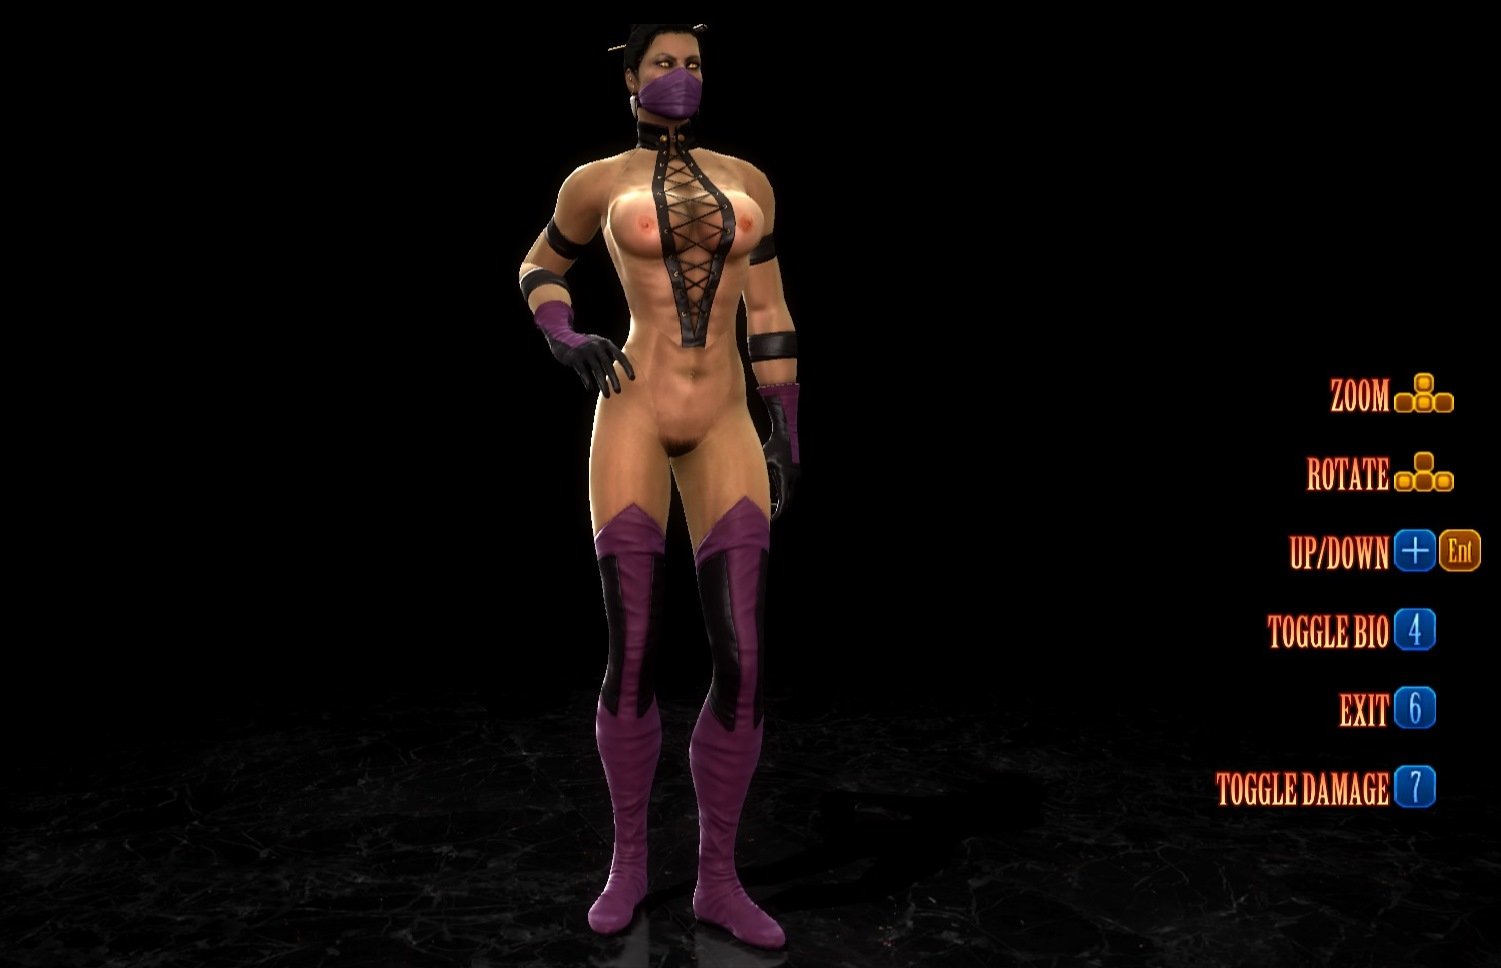 Mortal kombat nude mode - 66 photo